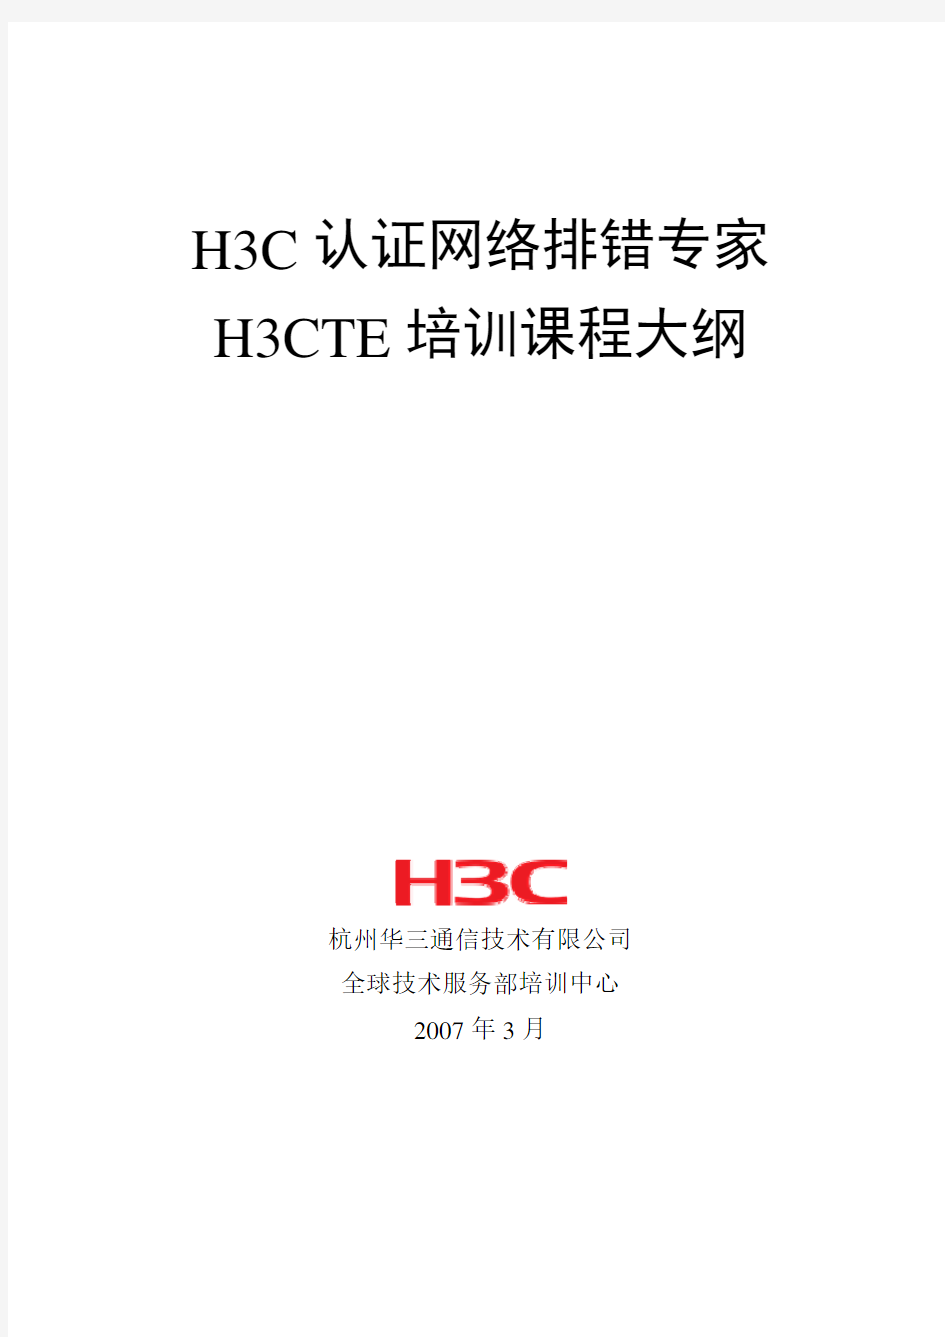 H3CTE Course